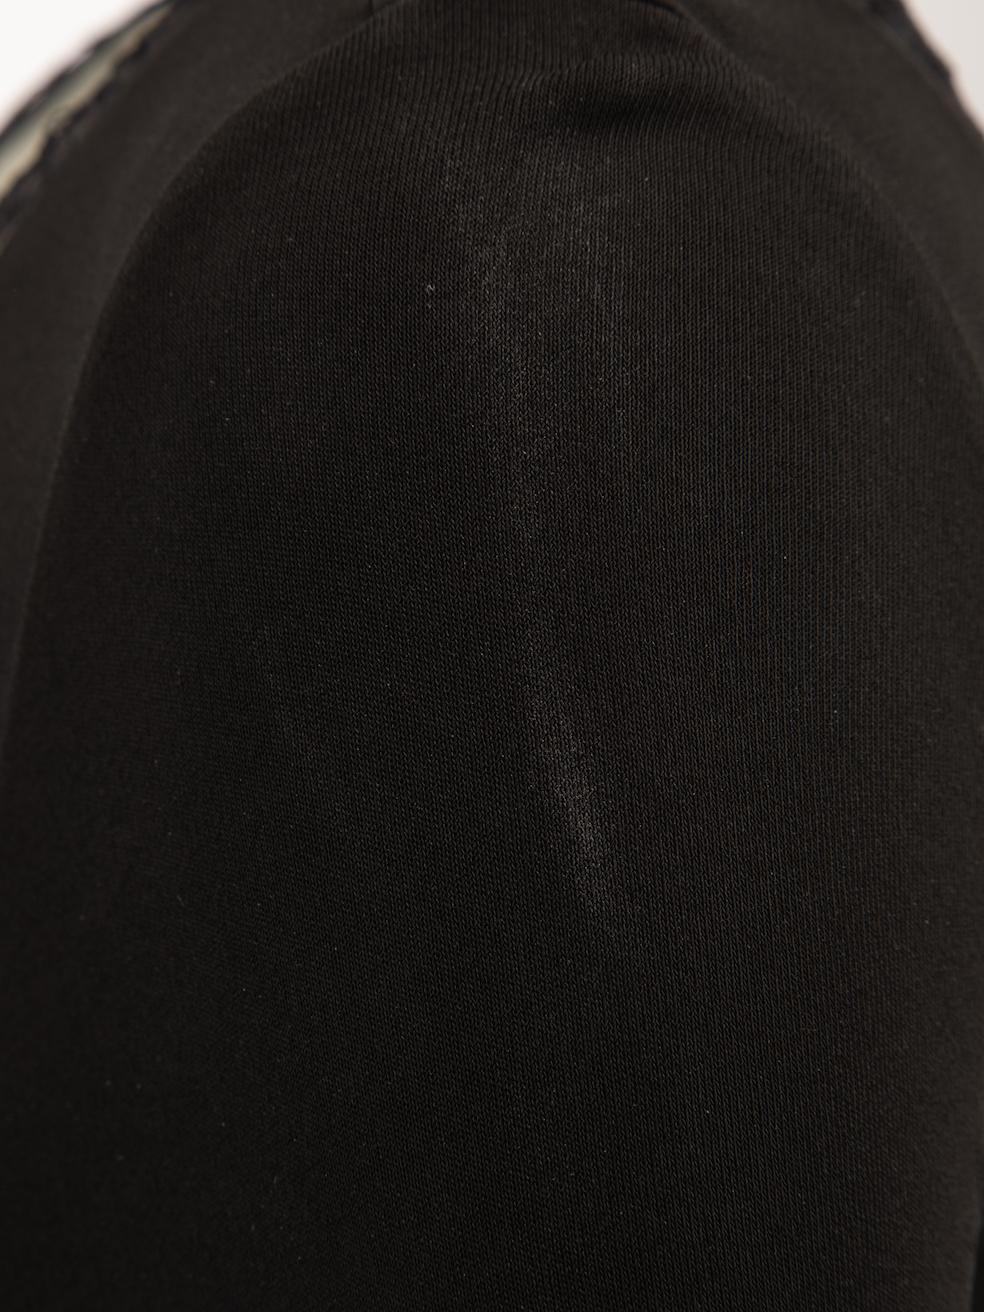 Gucci Women's Black Mesh Panel Long Sleeve Dress For Sale 2